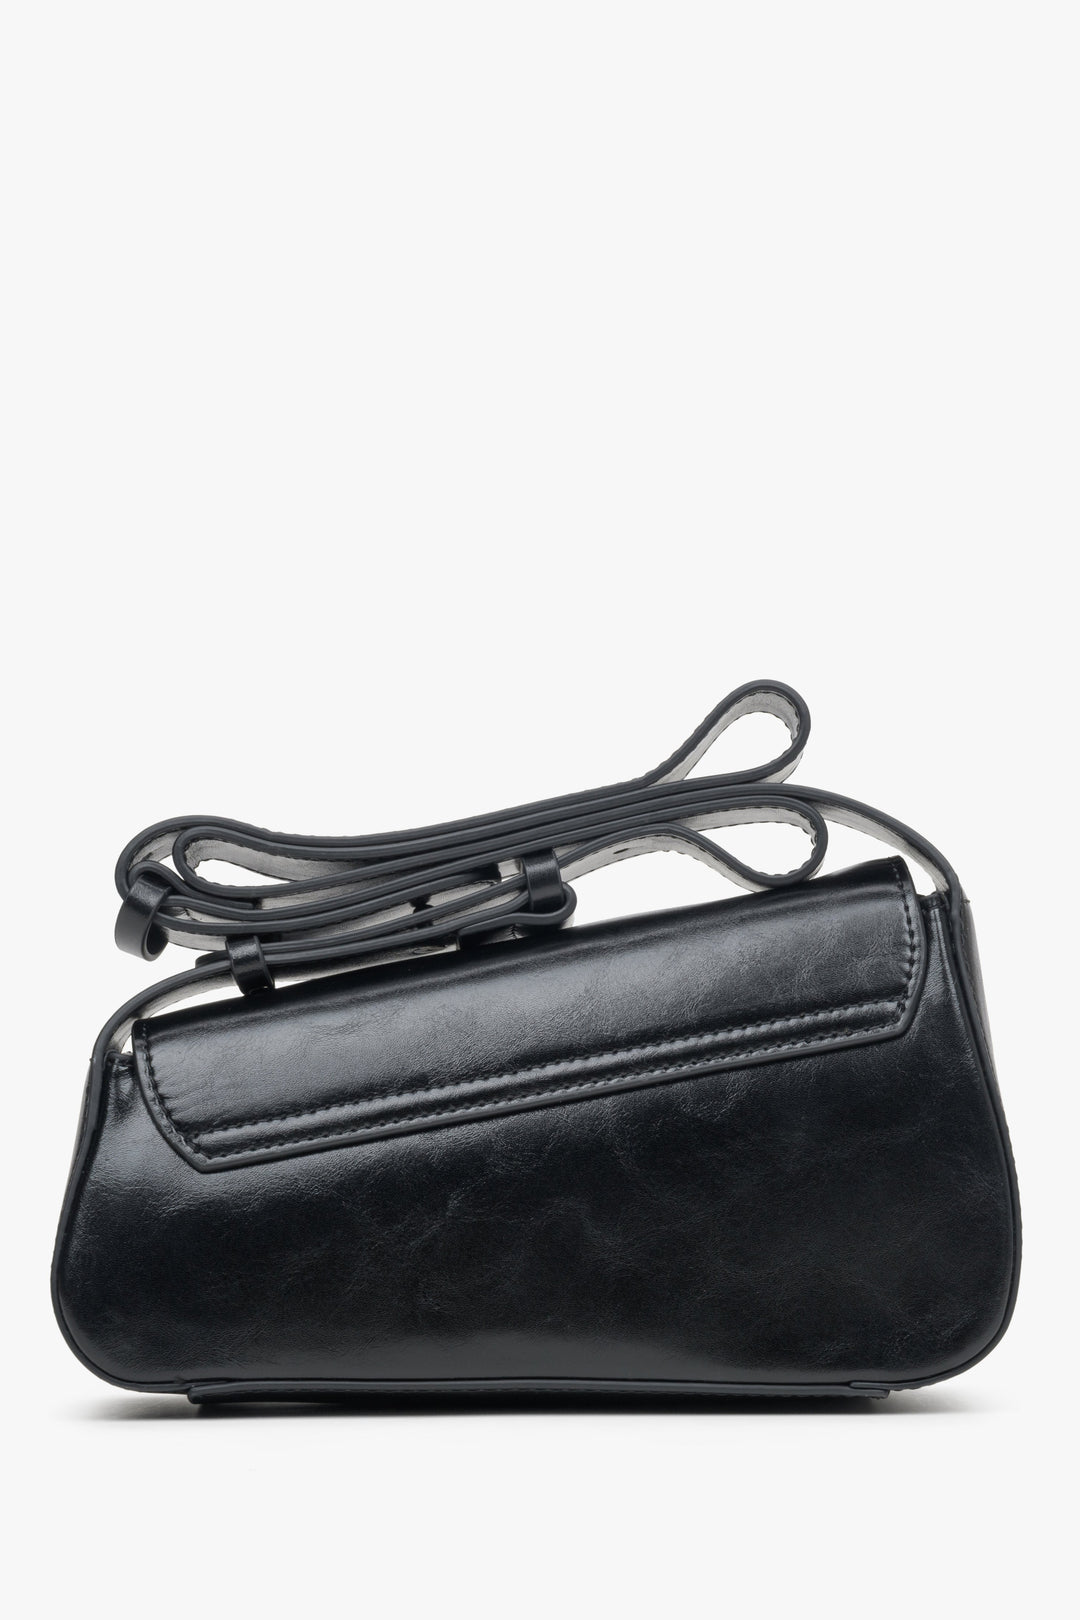 Estro's black leather baguette bag - reverse side.